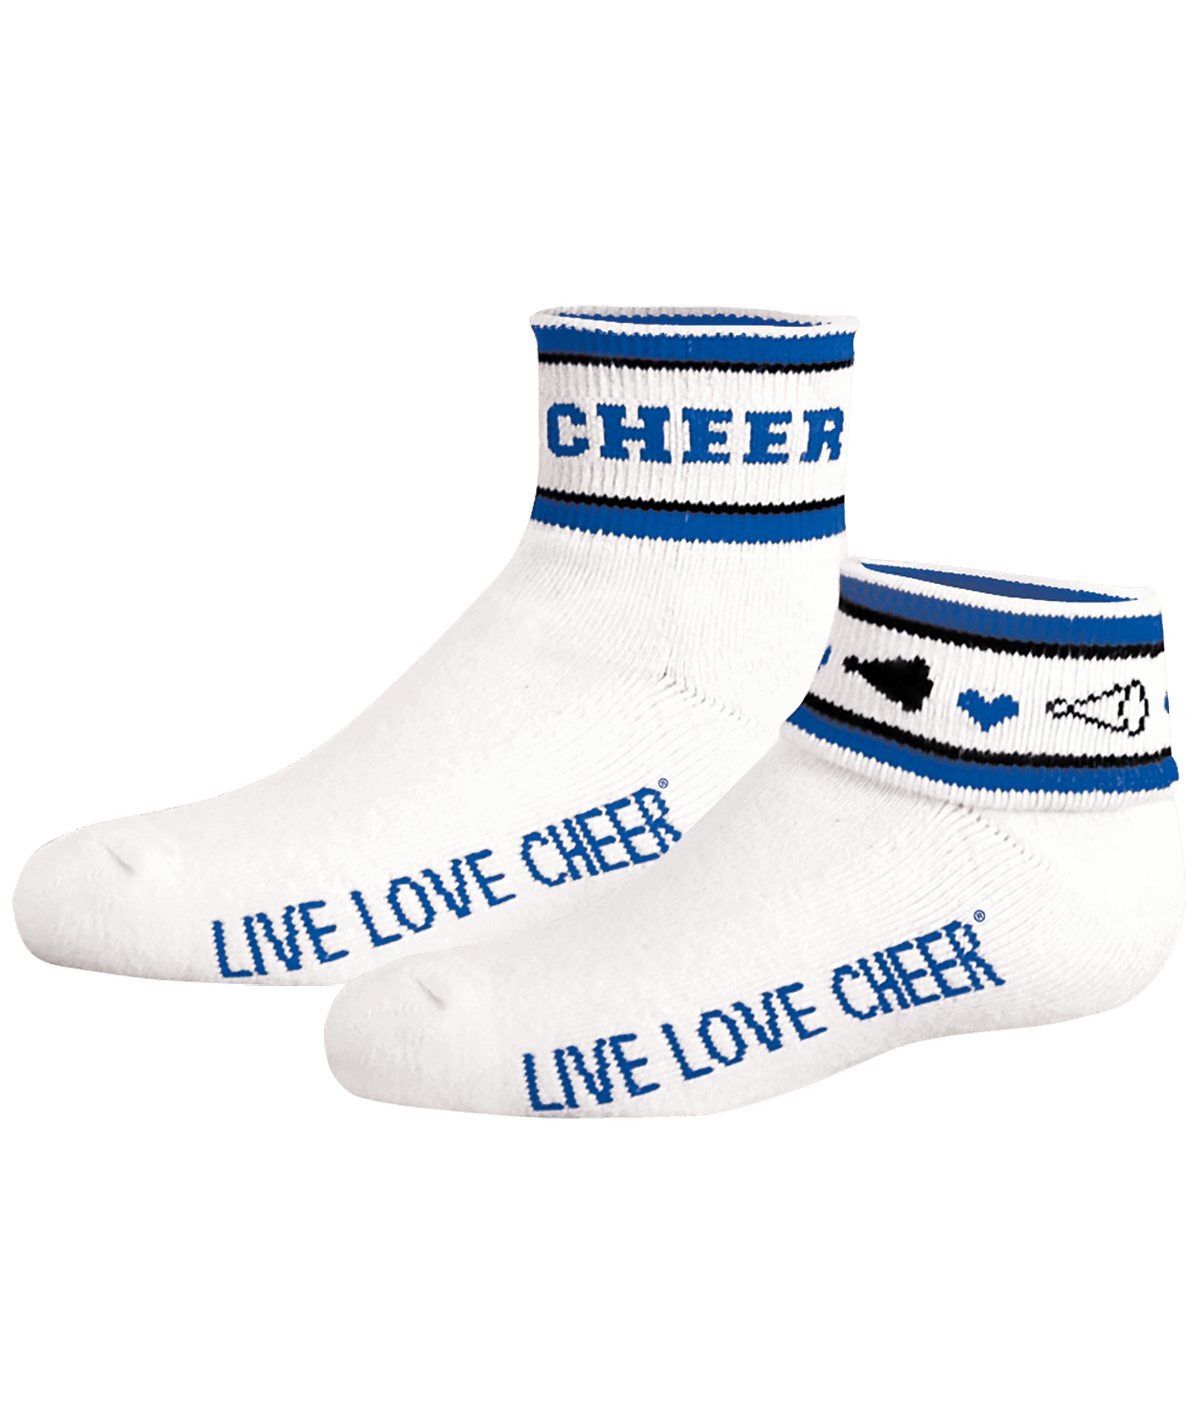 Chasse Flip Crew Cheer Sock